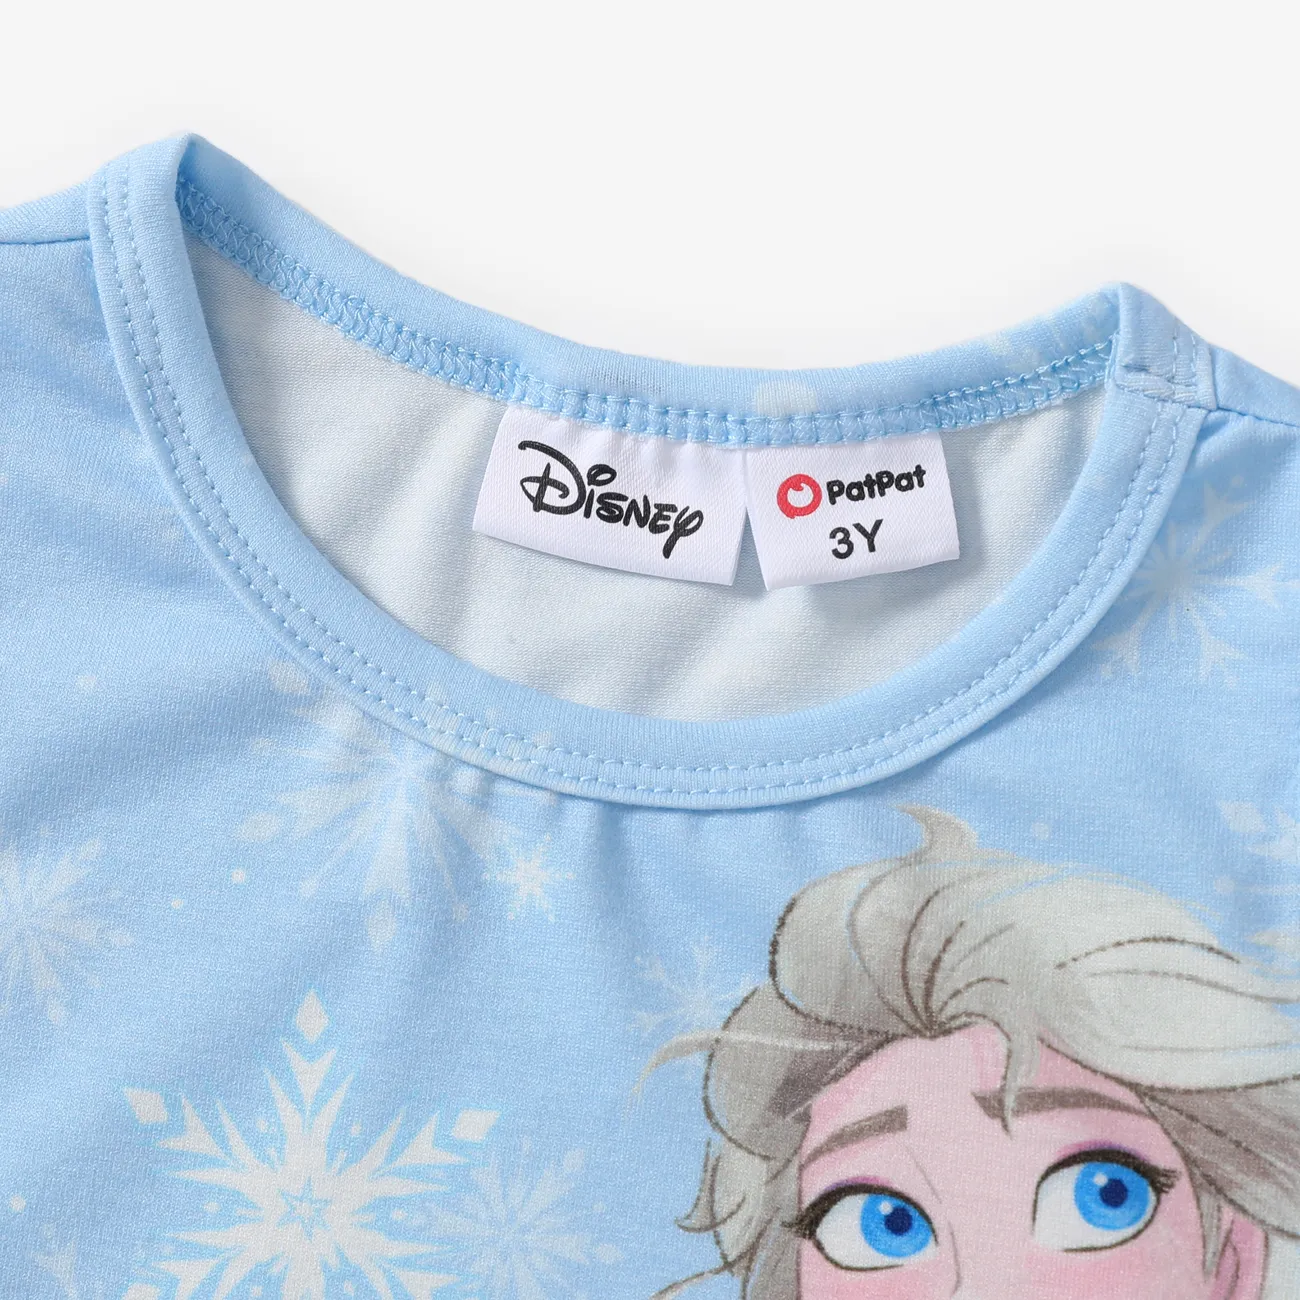 Disney Frozen Toddler Girls Elsa/Anna 1pc Naia™ Sparkling Flutter-sleeve Sleeve Dress Blue big image 1